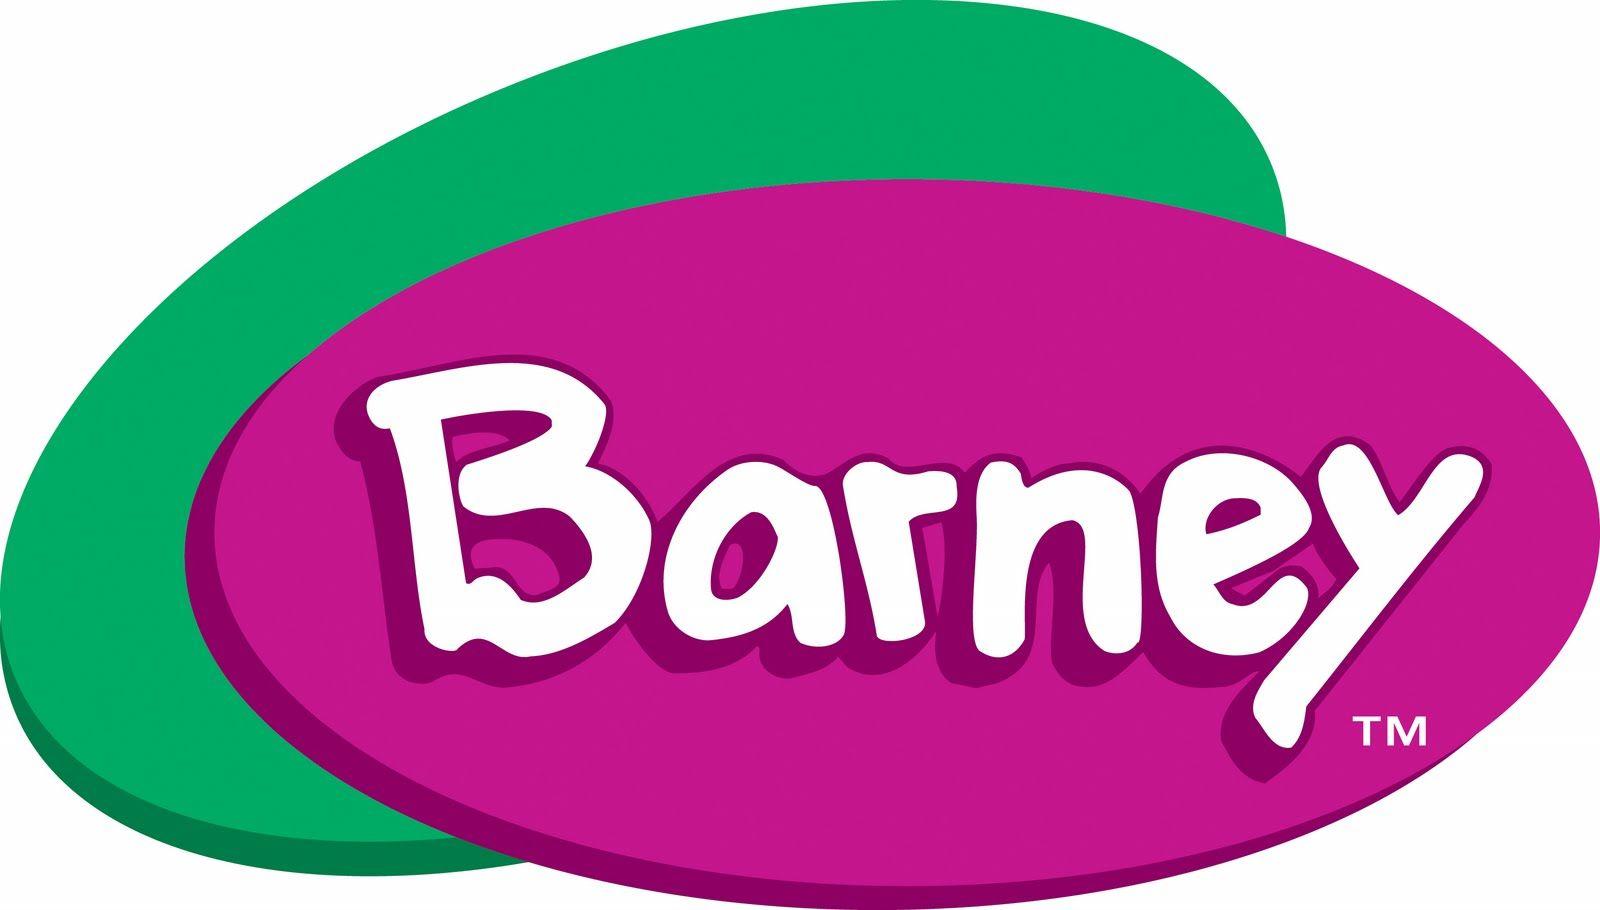 Barney Logo - Image - Barney logo.jpg | Logopedia | FANDOM powered by Wikia